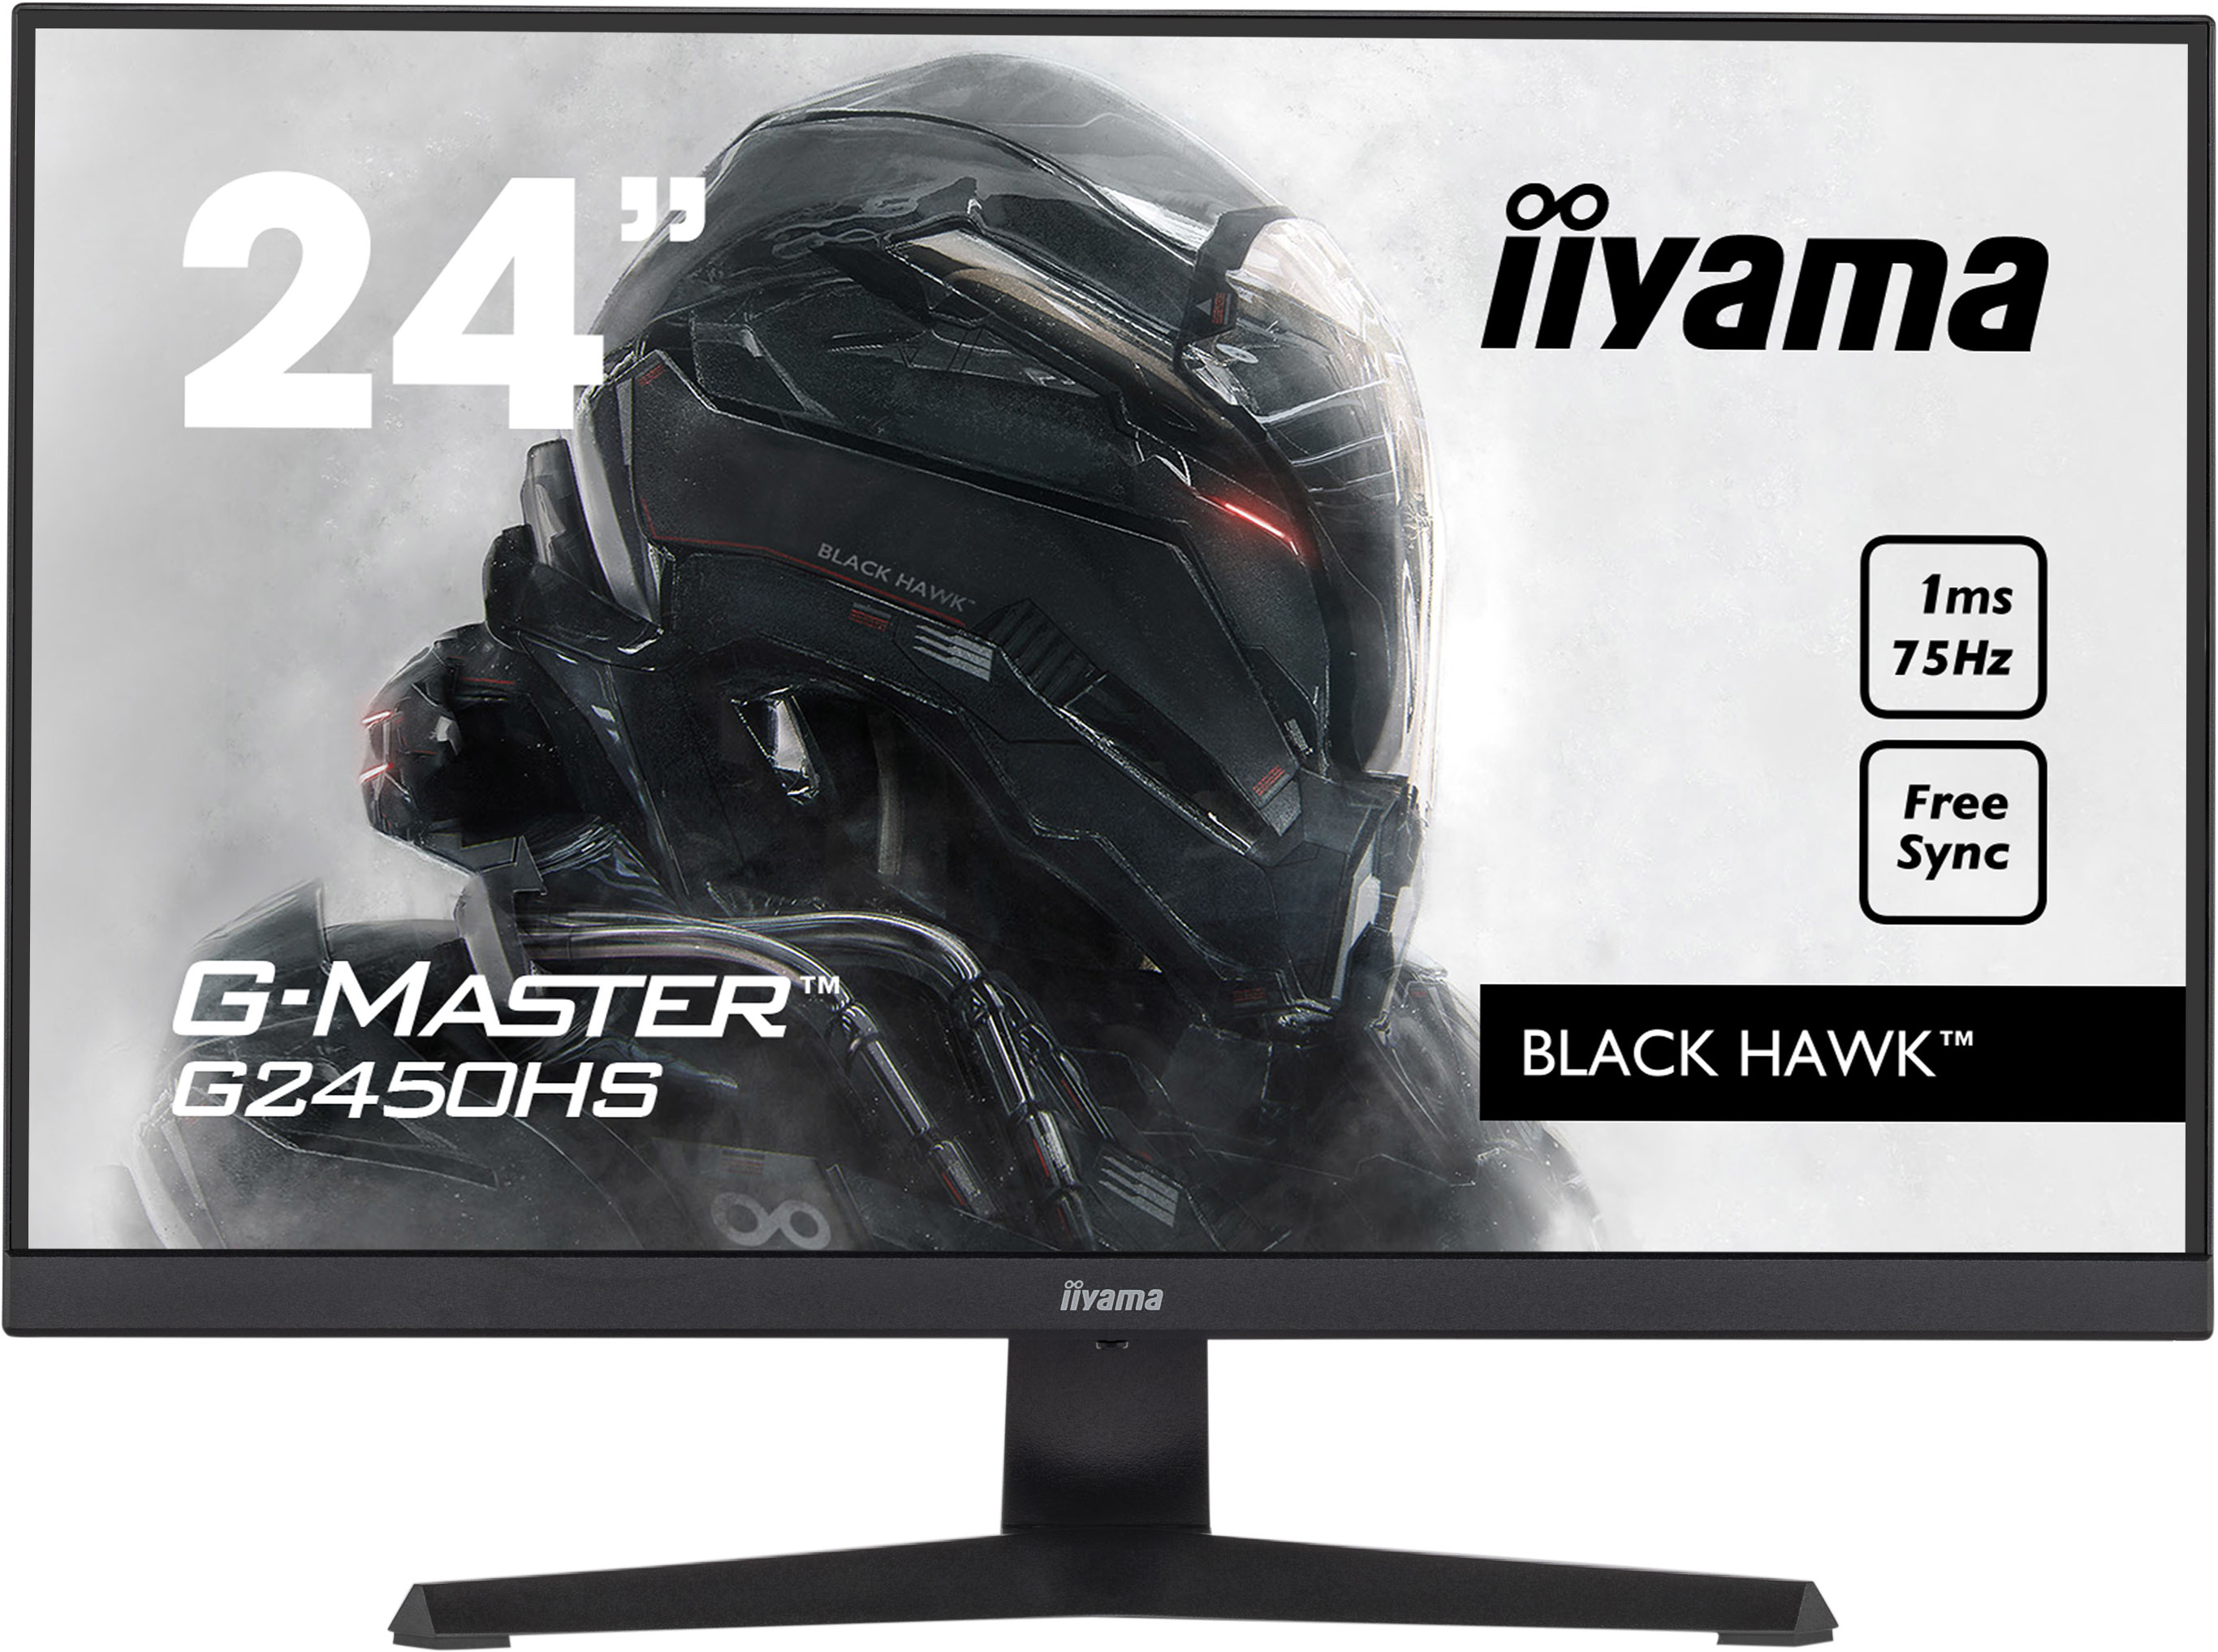 iiyama G-MASTER G2450HS-B1 computer monitor